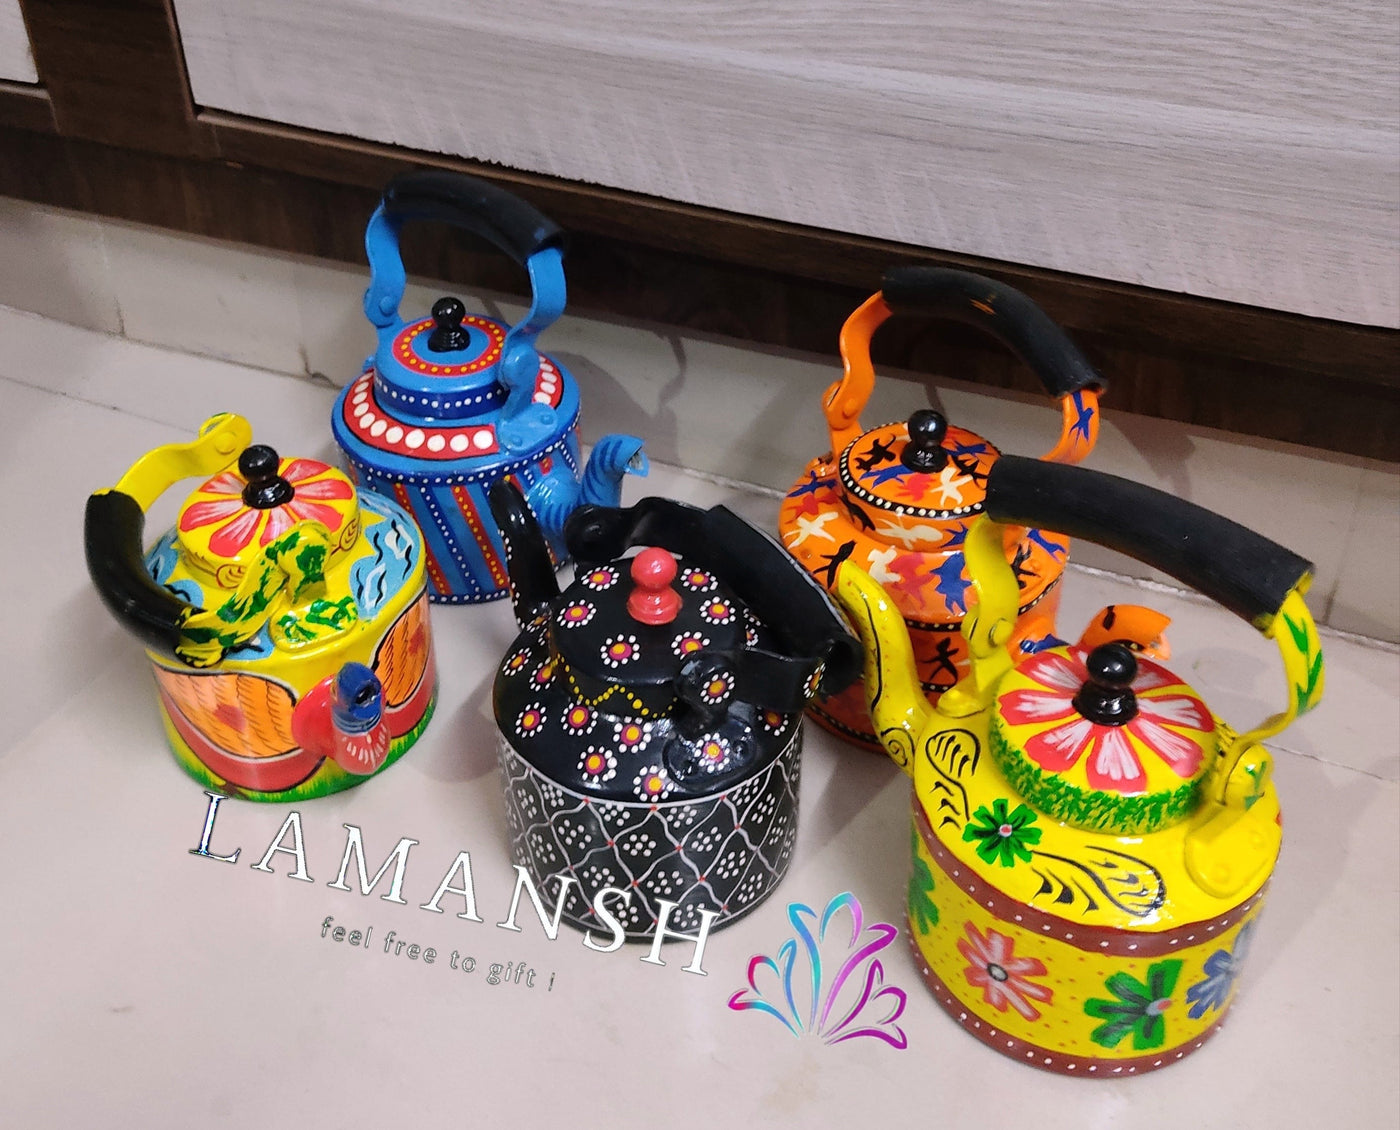 LAMANSH kettles for decor LAMANSH® Metal Oil painted Rajasthani Kettle for Event Decoration / Kettle's for Hanging Decoration backdrop decoration for festival